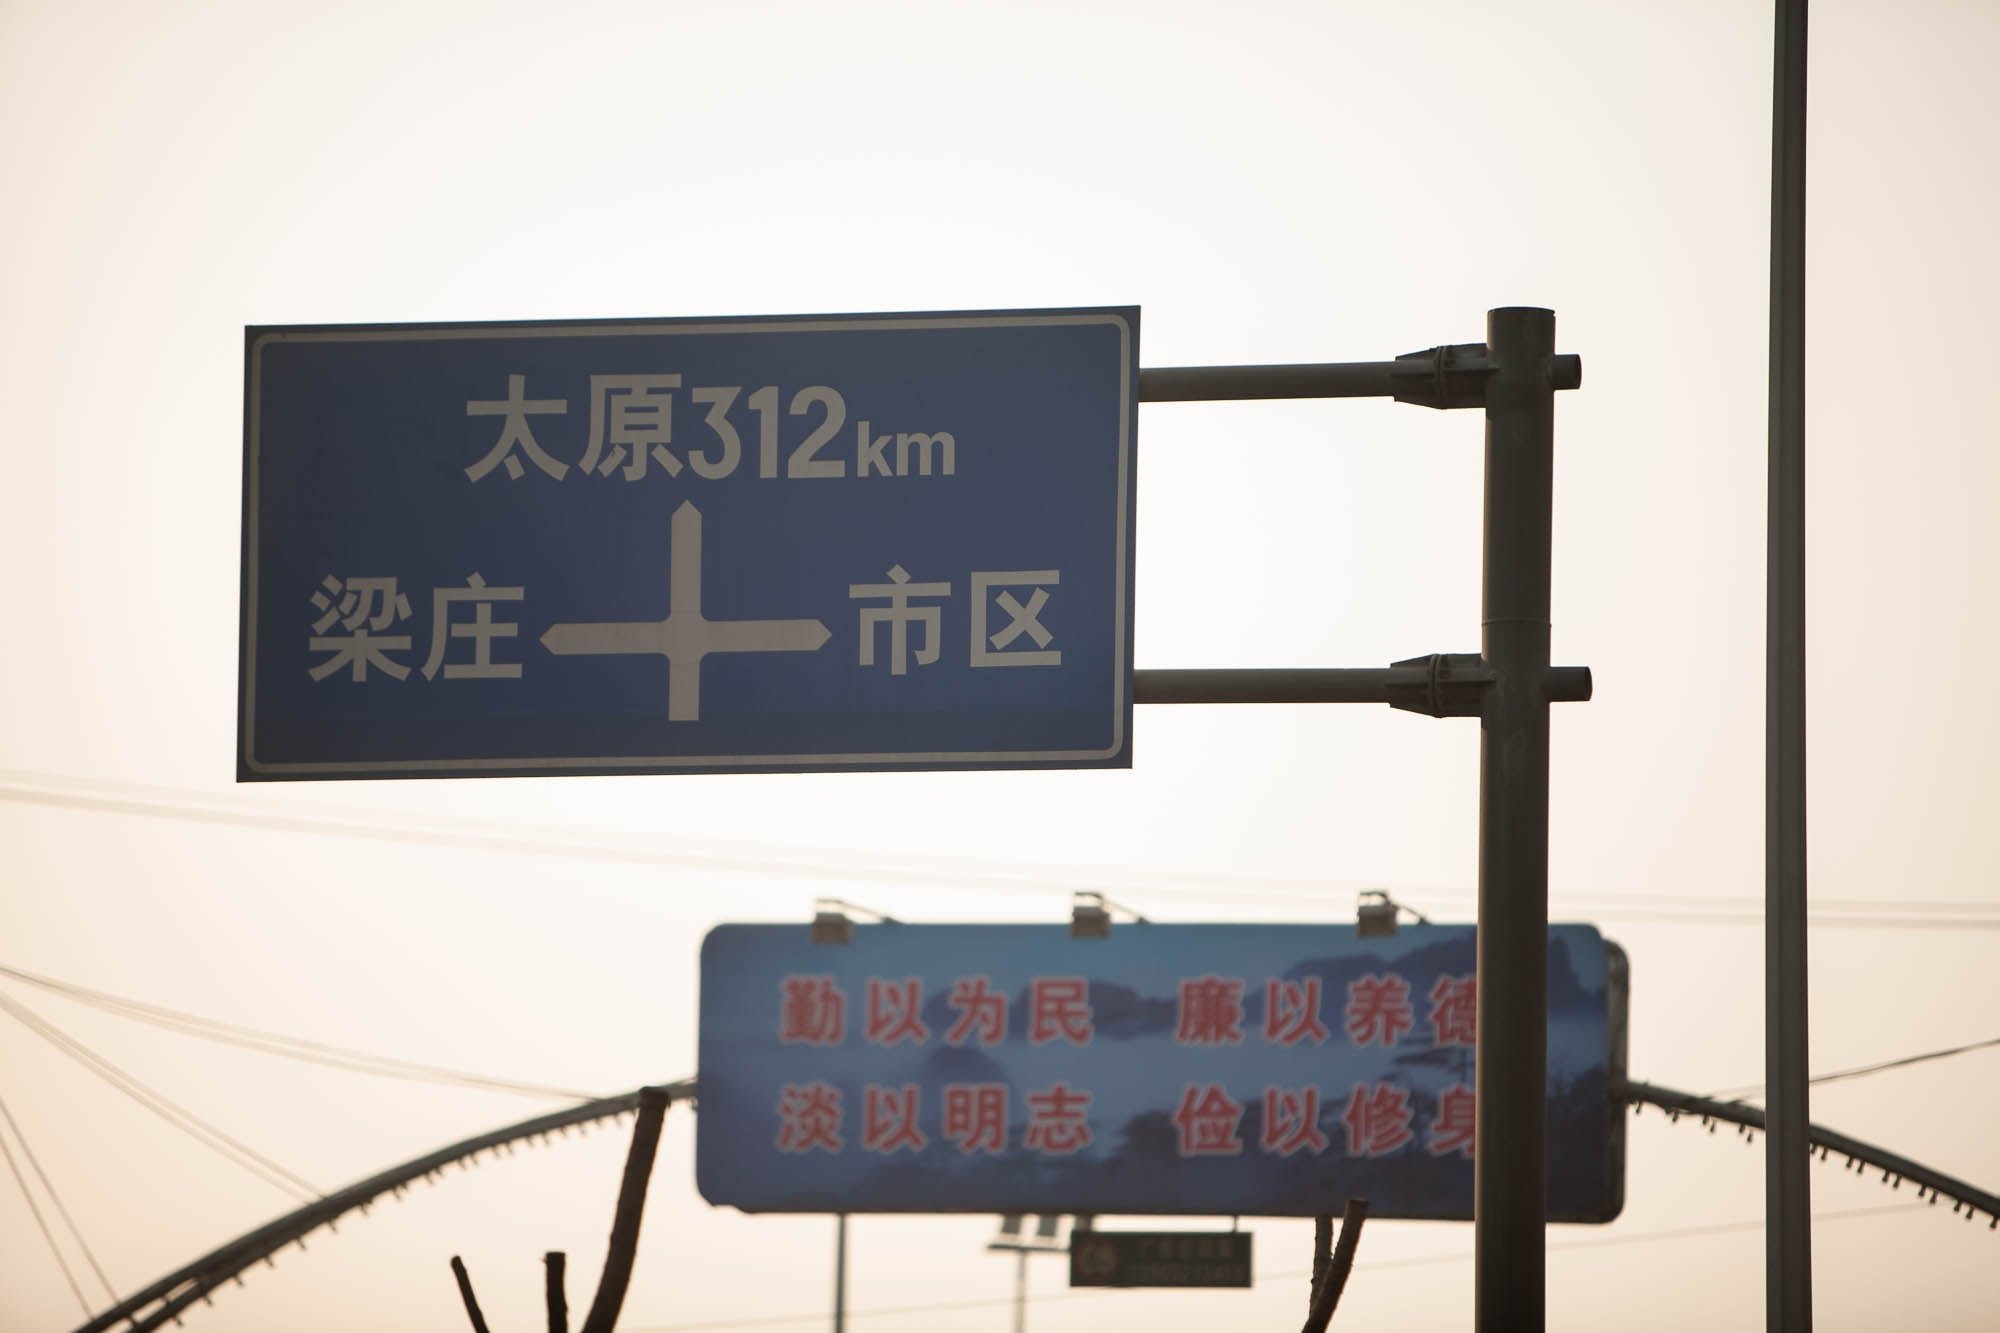 Taiyuan 312km